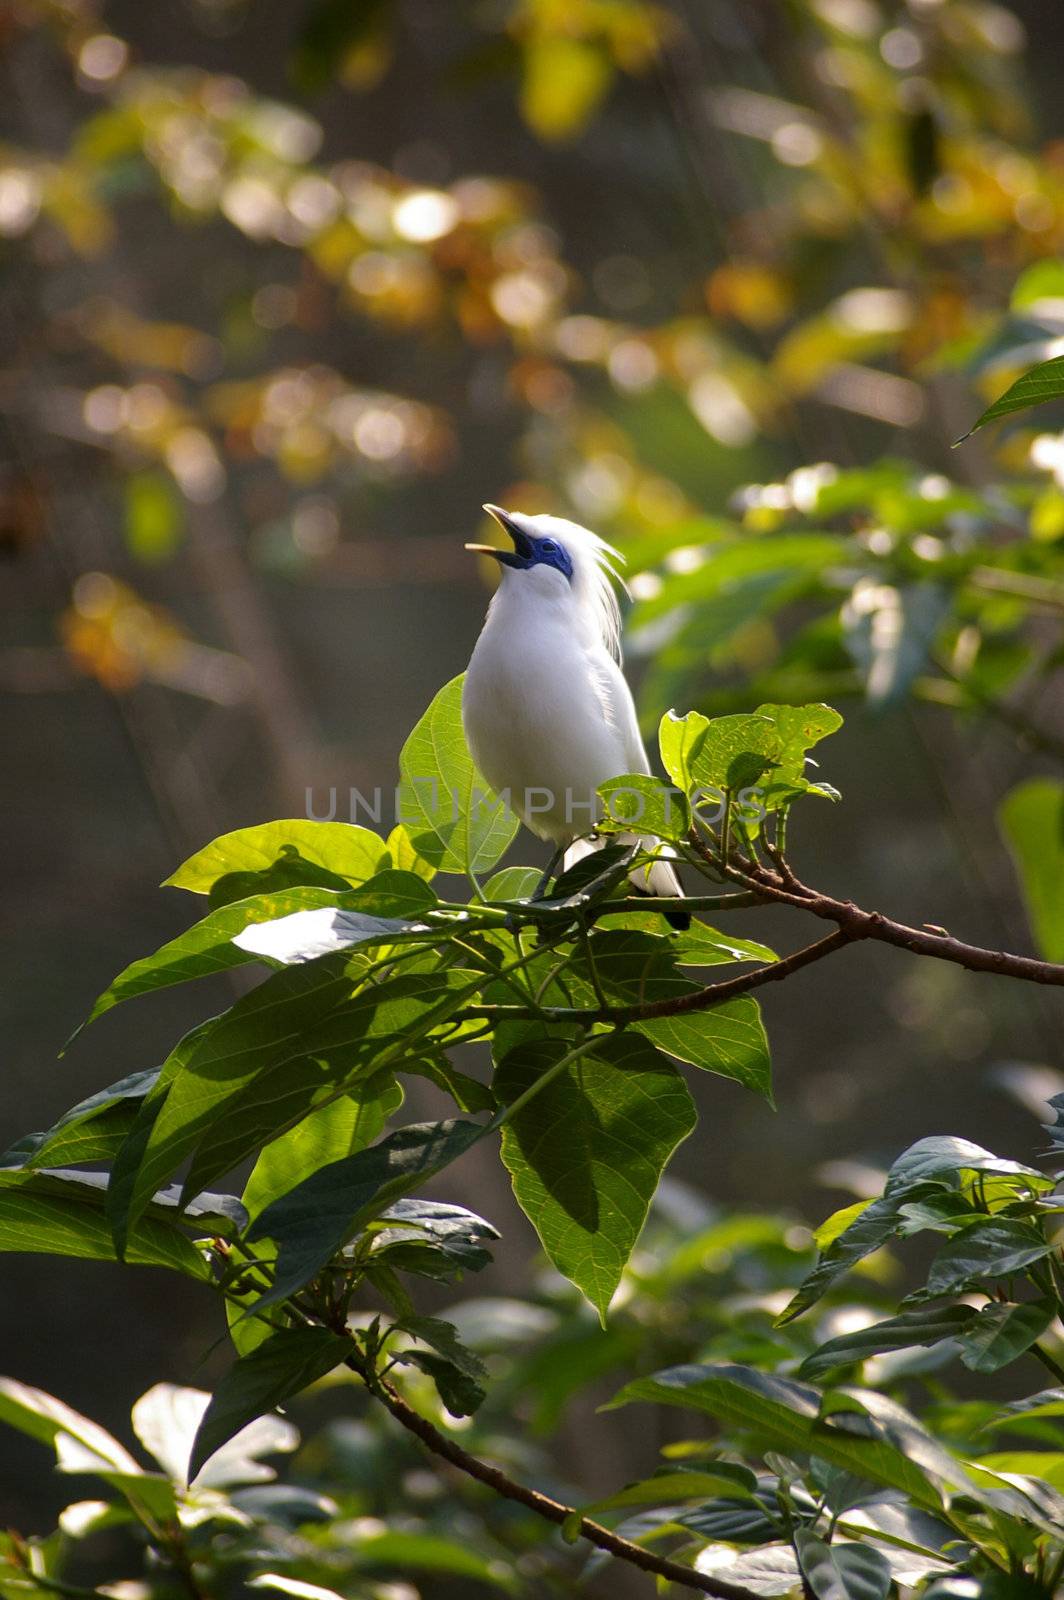 Singing bird on tree by kawing921